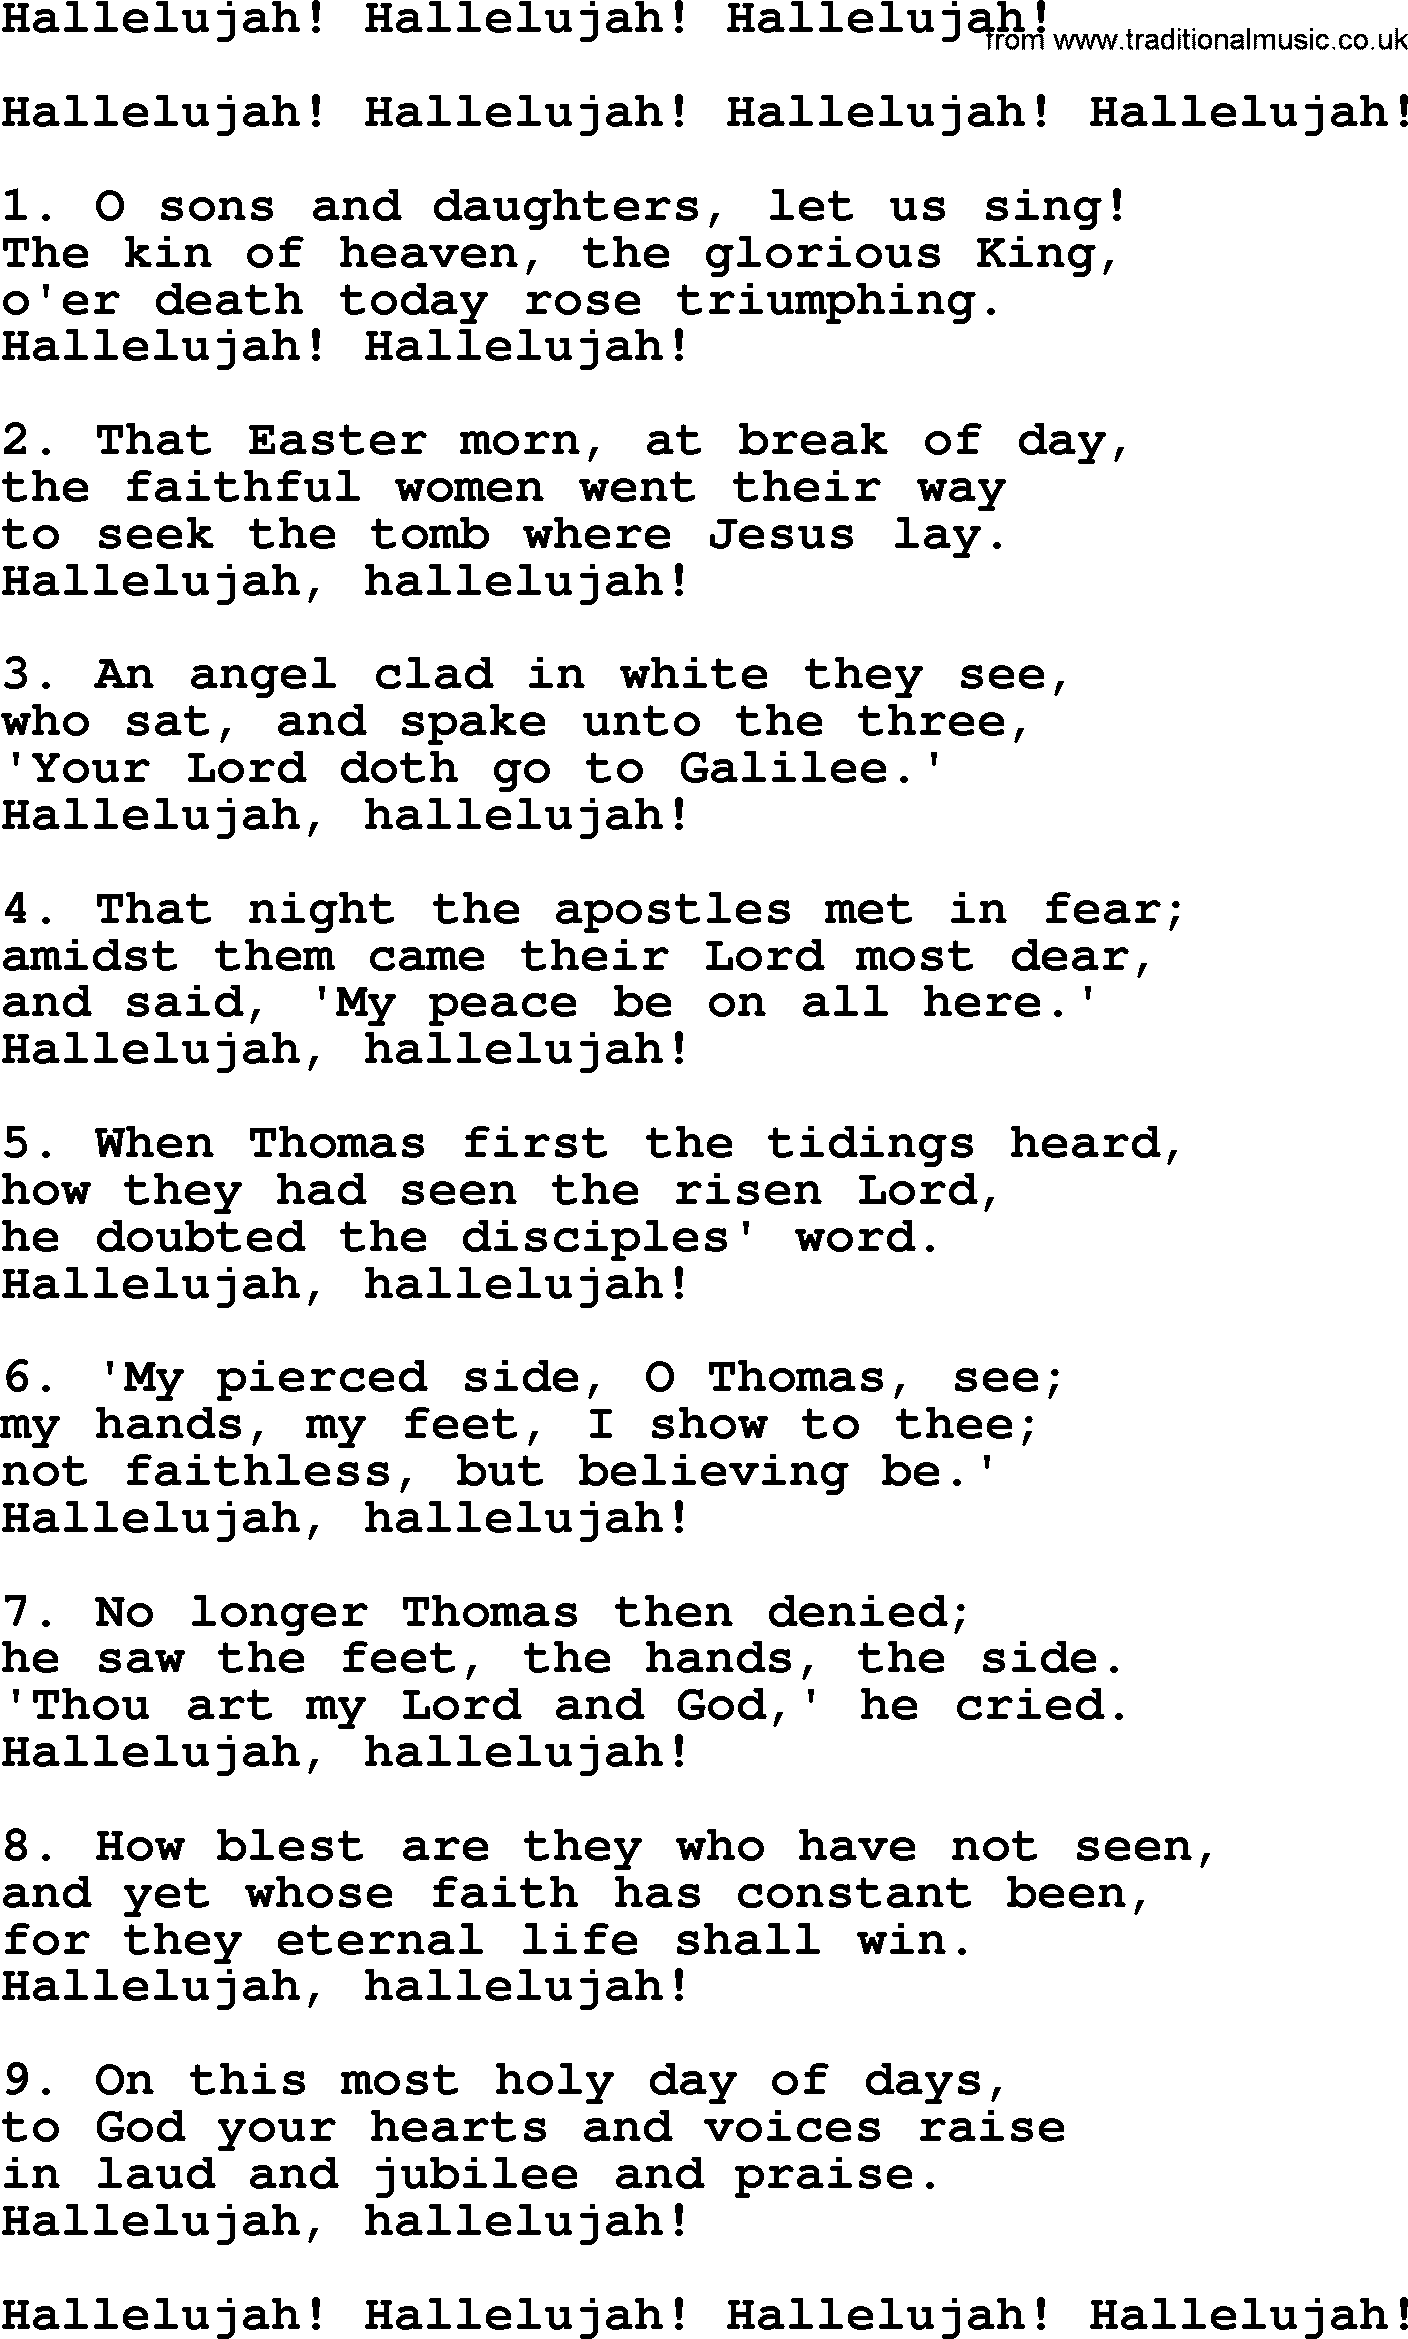 Hallelujah! - lyrics, and PDF.